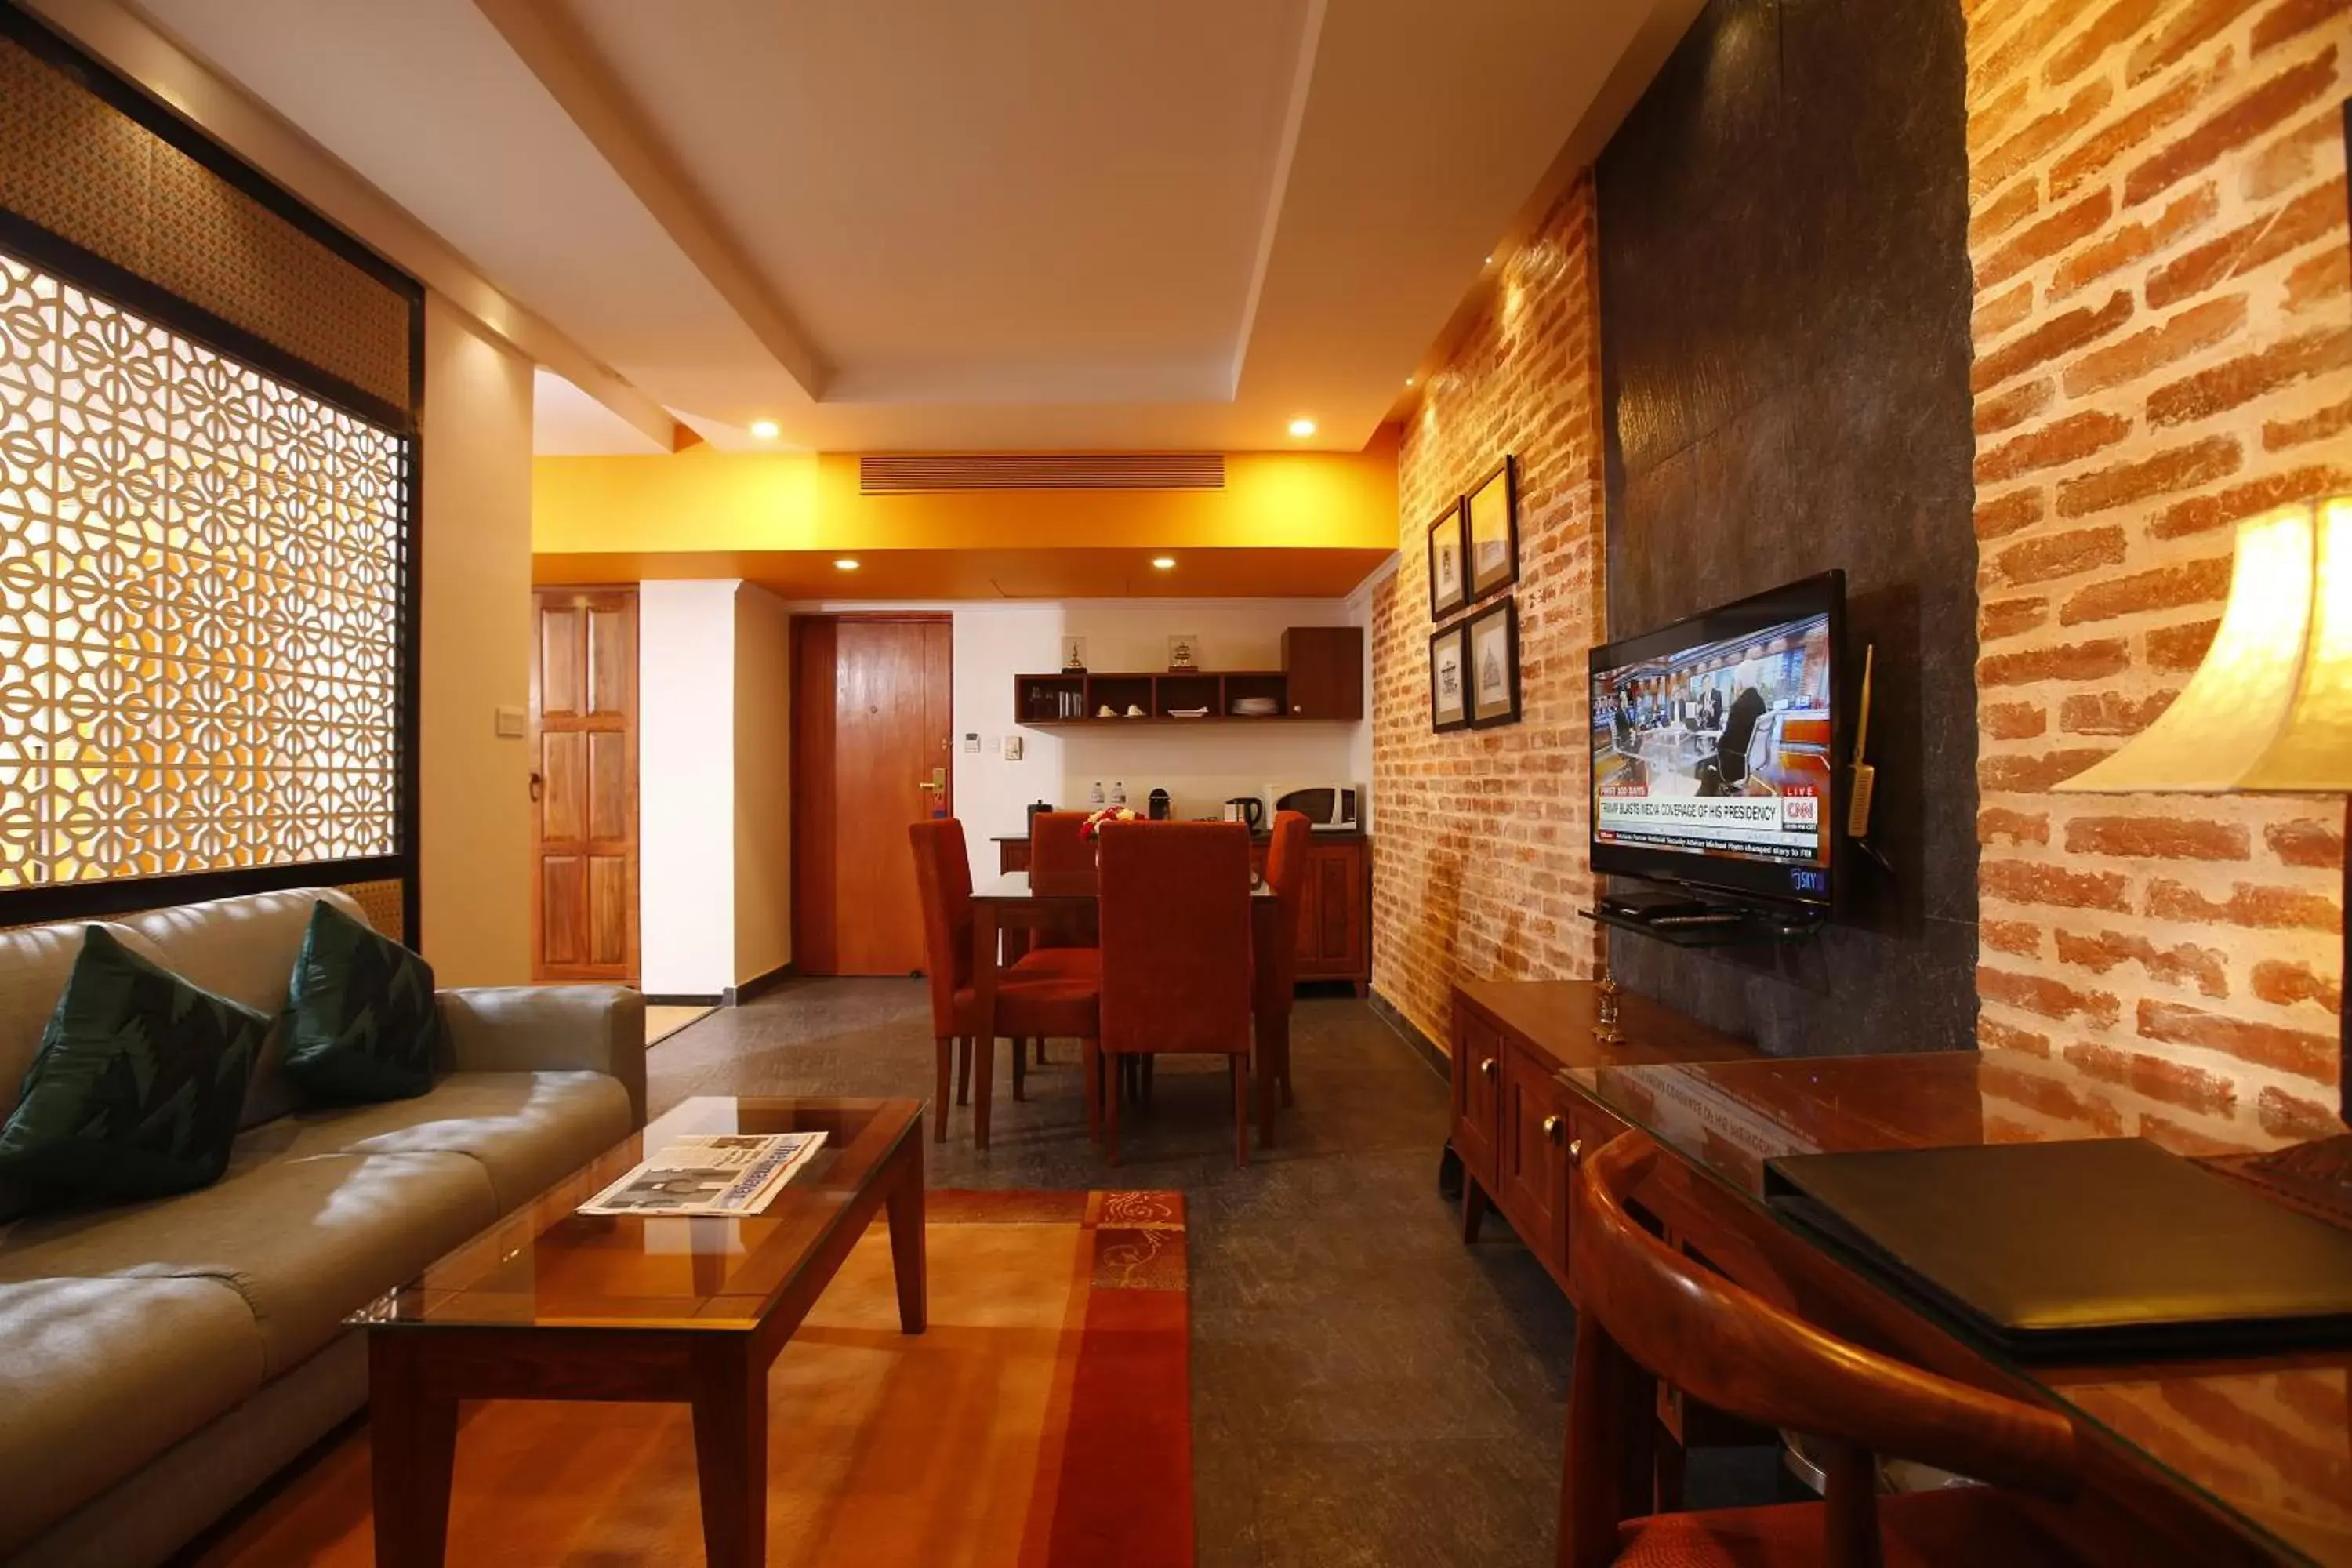 Coffee/tea facilities, Seating Area in Royal Singi Hotel